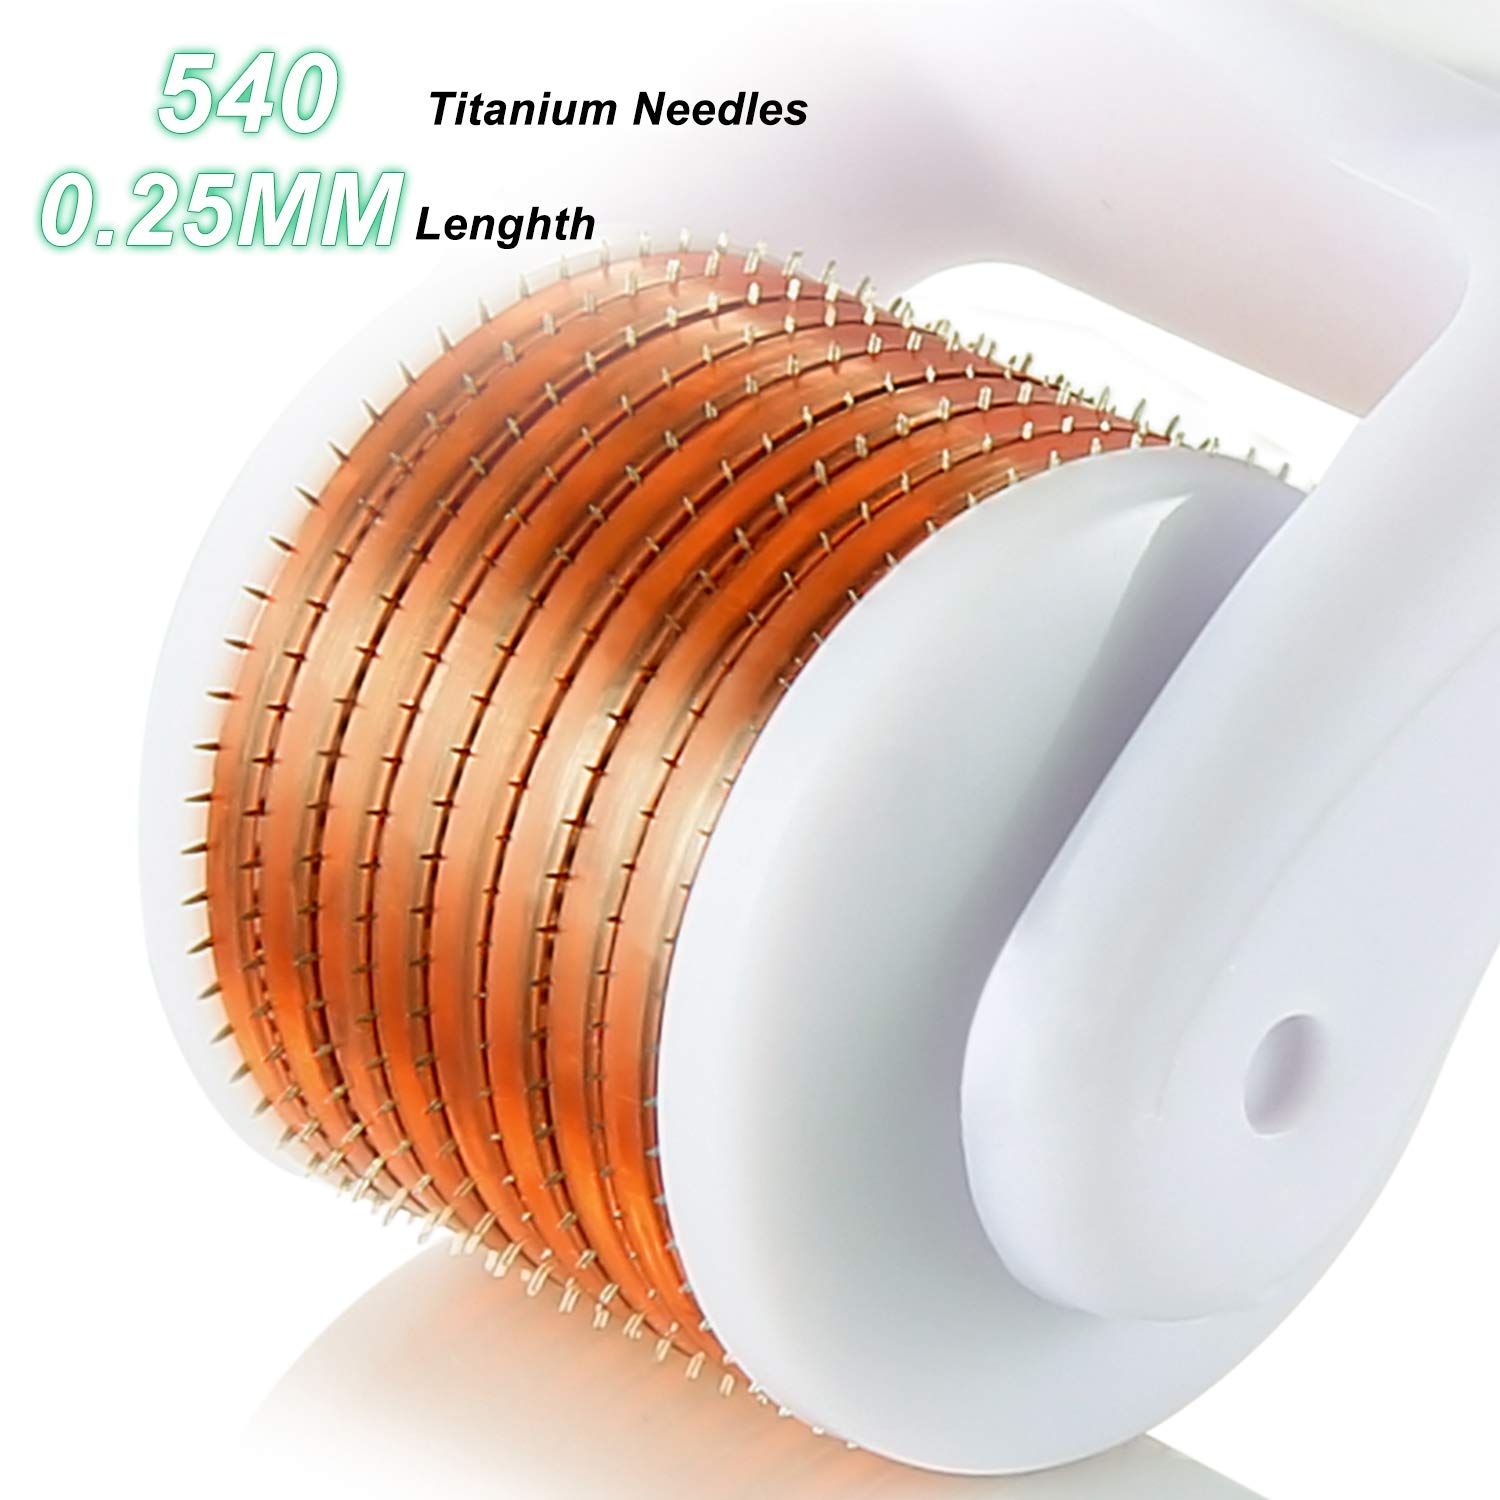 Koi Beauty Derma Roller 0.25mm Microneedling Needle Roller 540 Microneedles